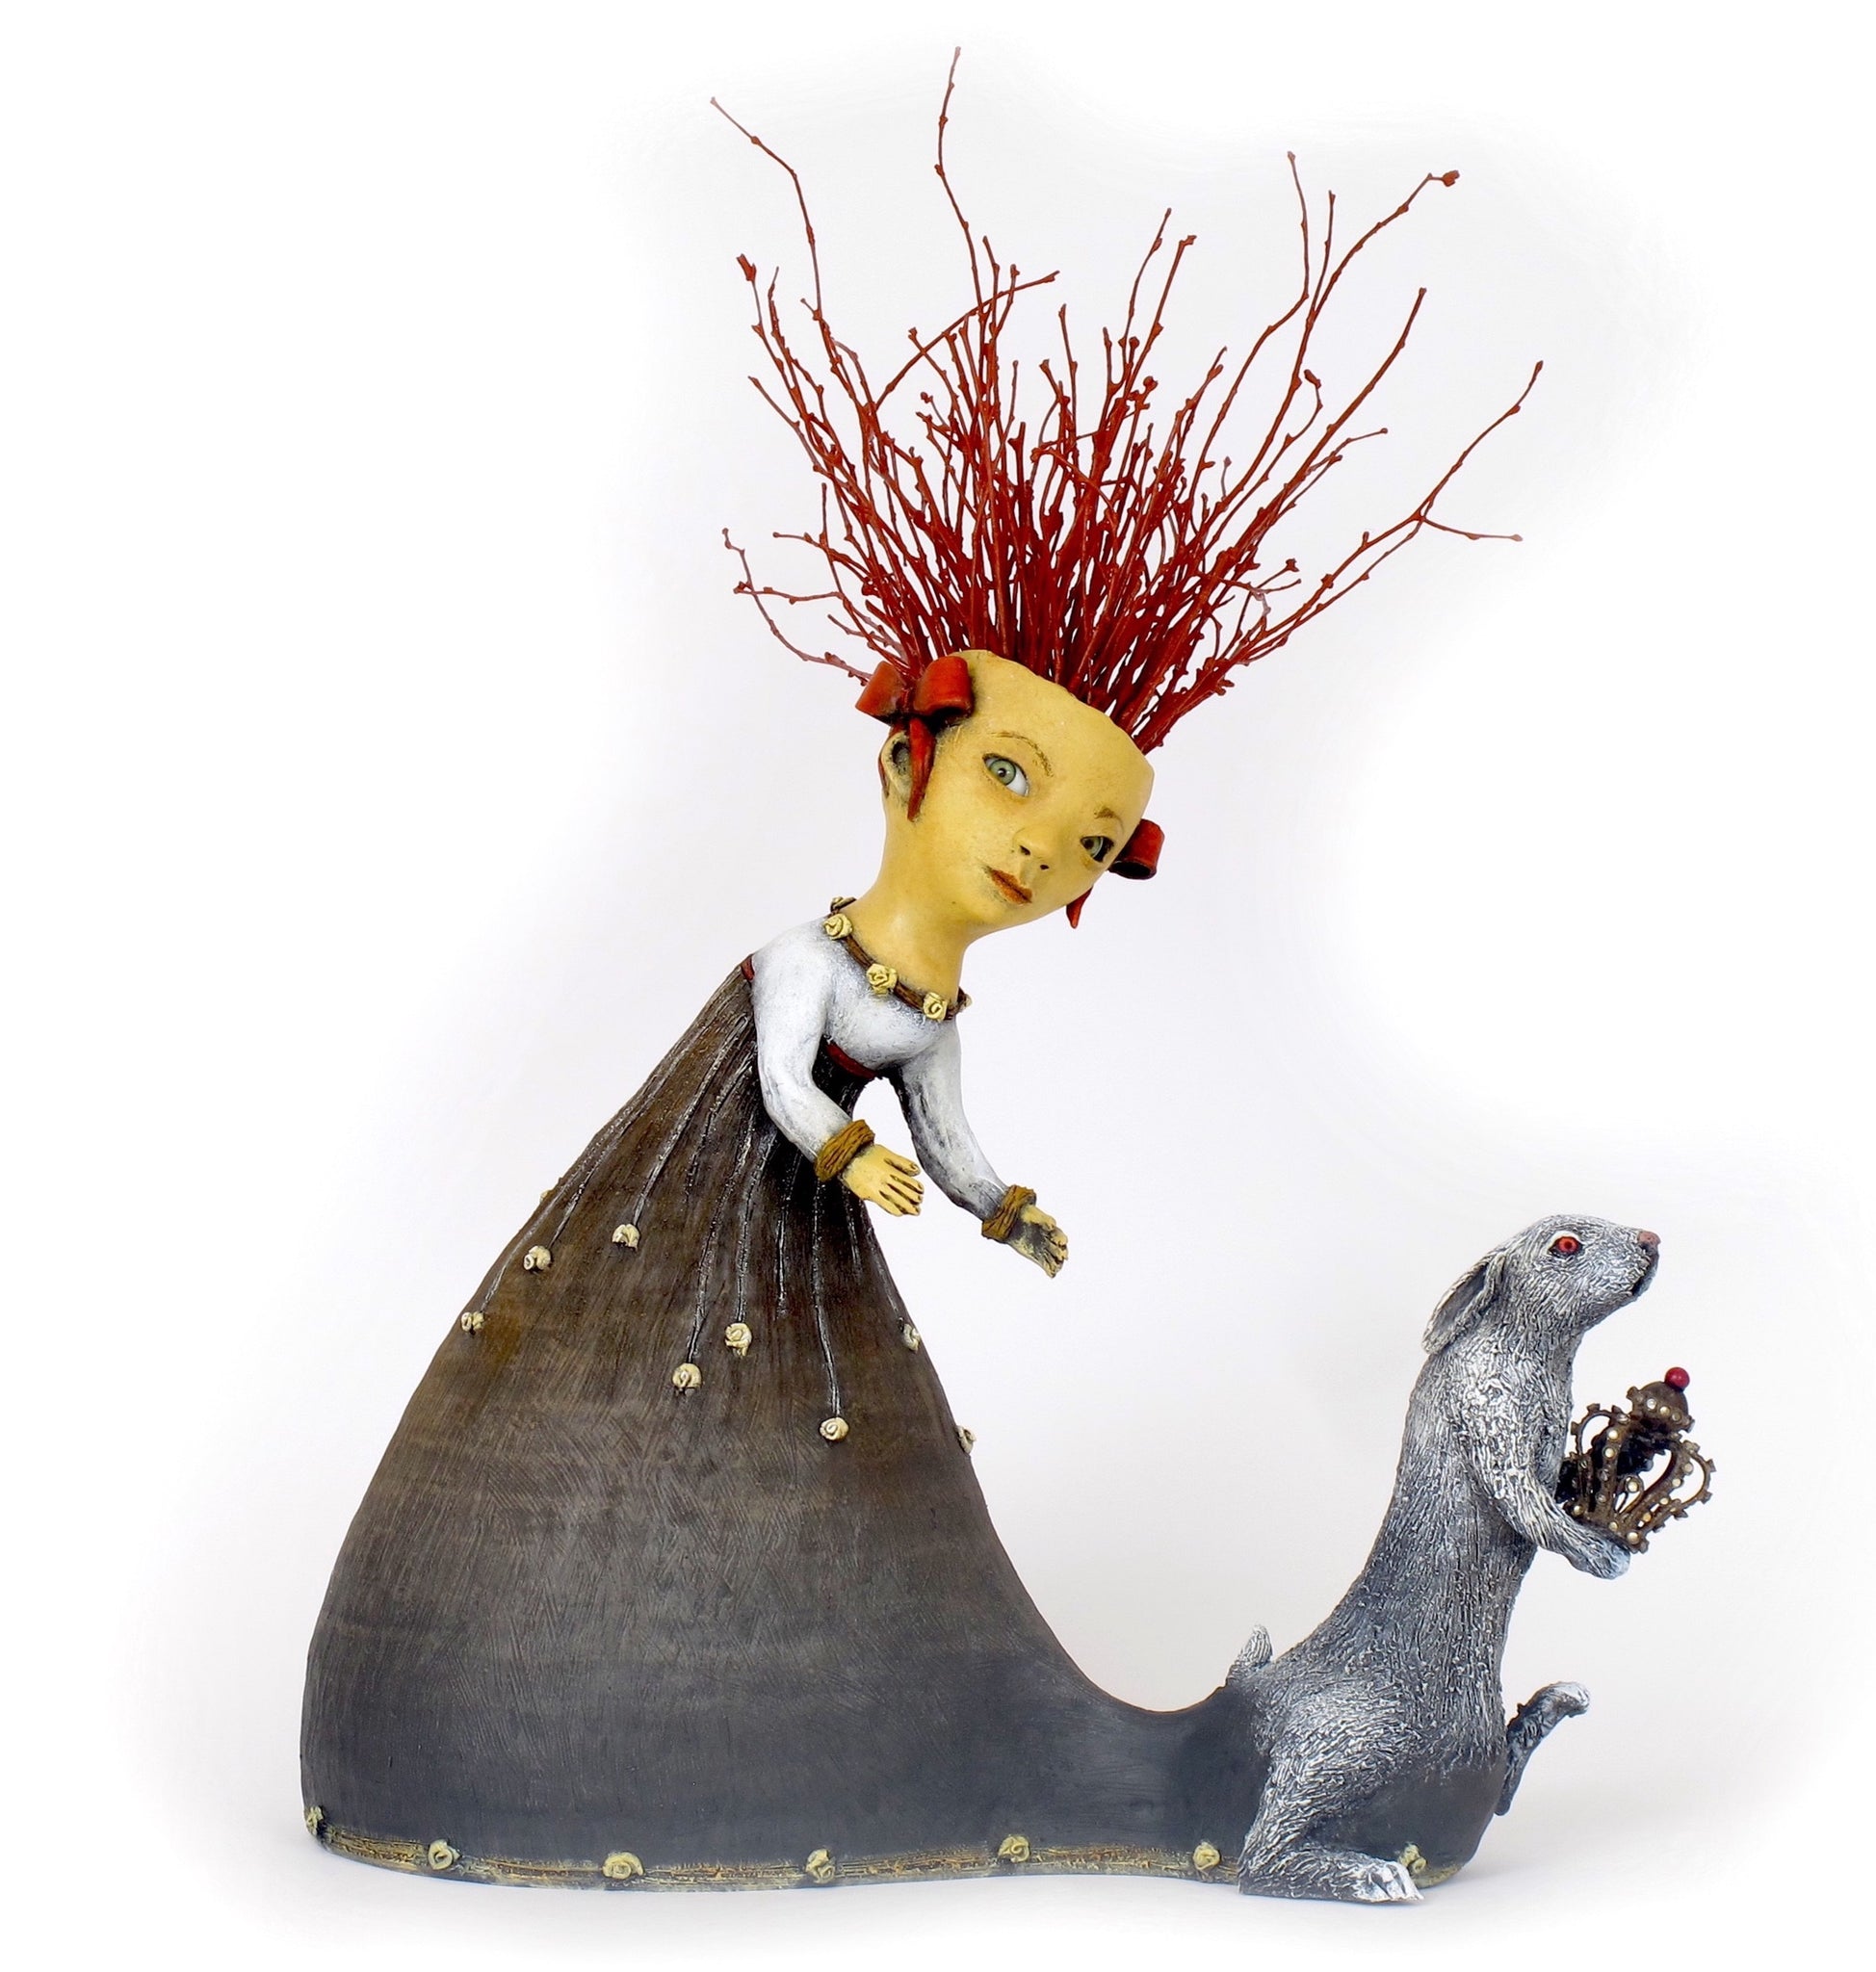 SOLD   "White Rabbit Steals the Jeweled Crown" original ceramic sculpture by Jacquline Hurlbert